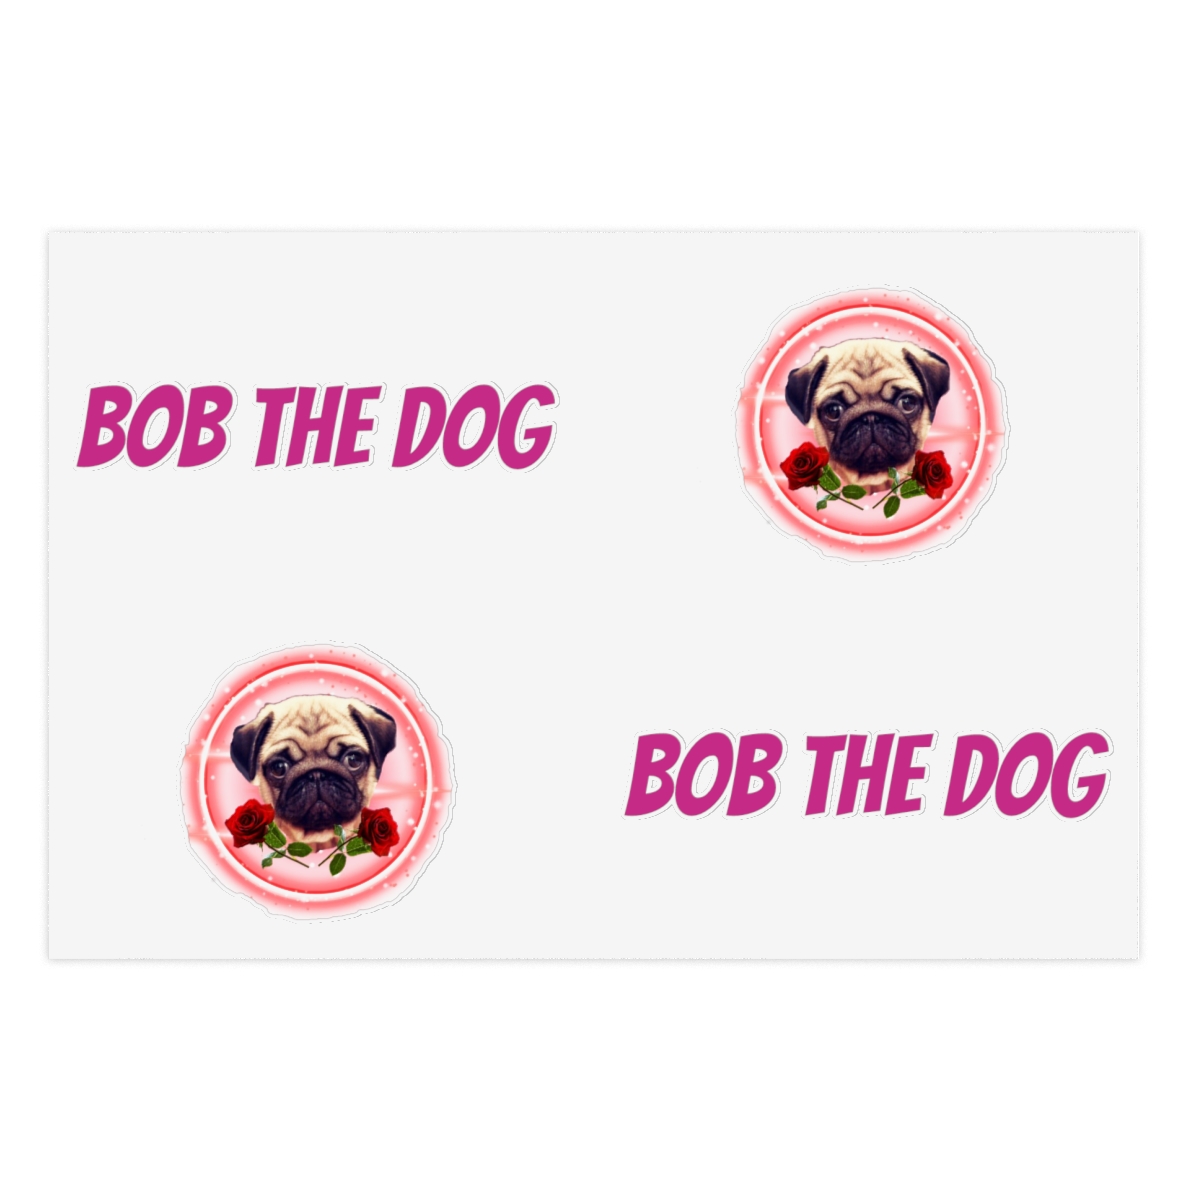 Bob the Dog Sticker Sheet product thumbnail image